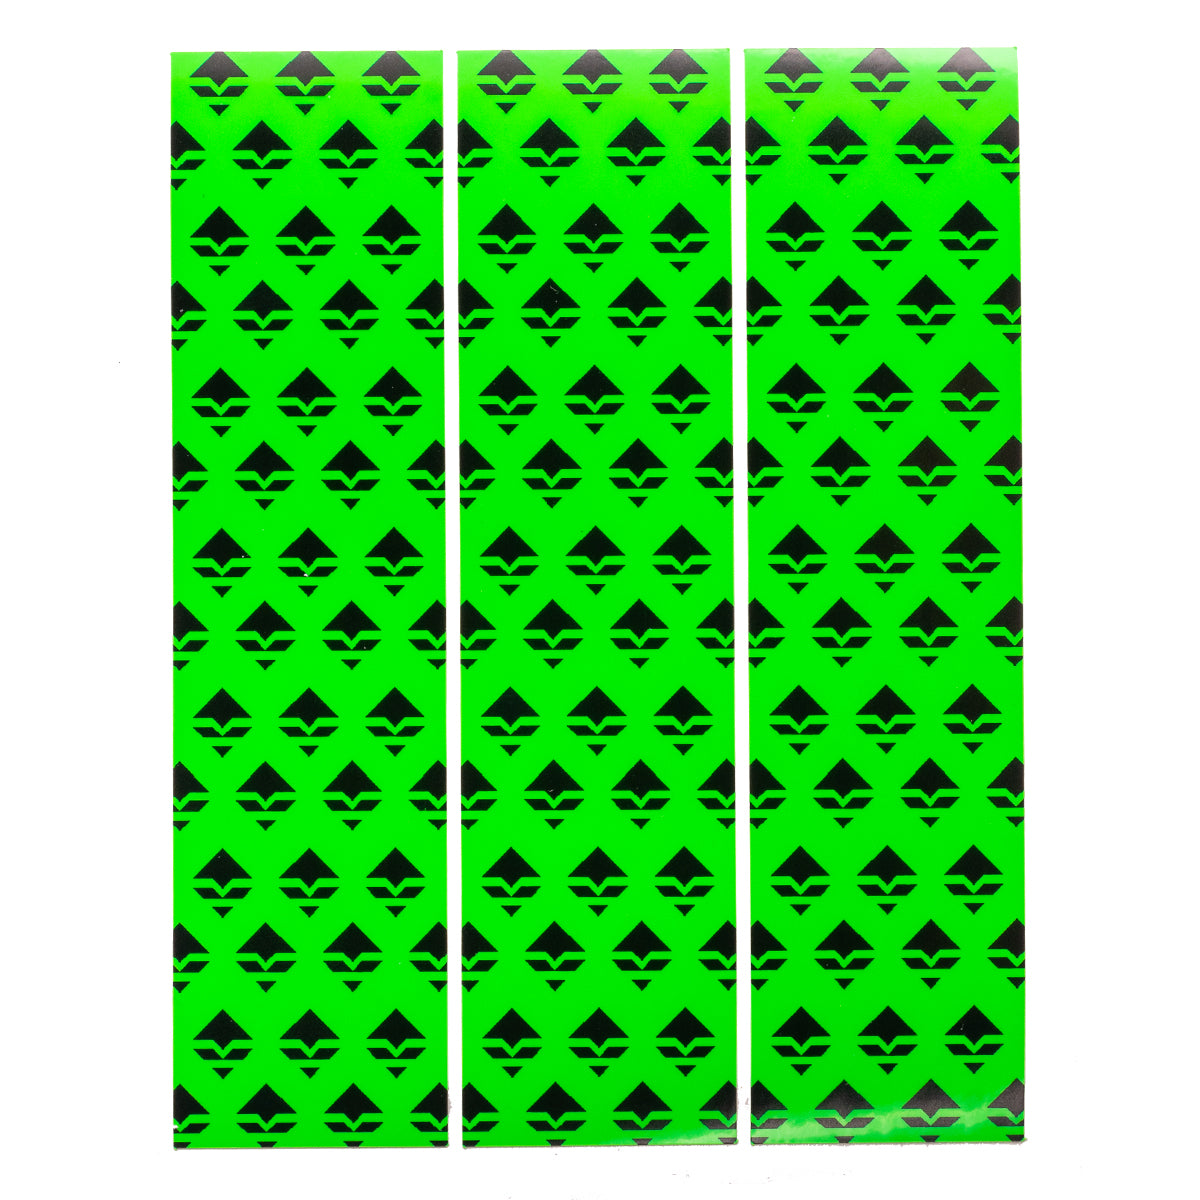 GOHUNT Custom Arrow Wrap Option 7 - 12 Count in Green by GOHUNT | Lone Peak Outdoors - GOHUNT Shop